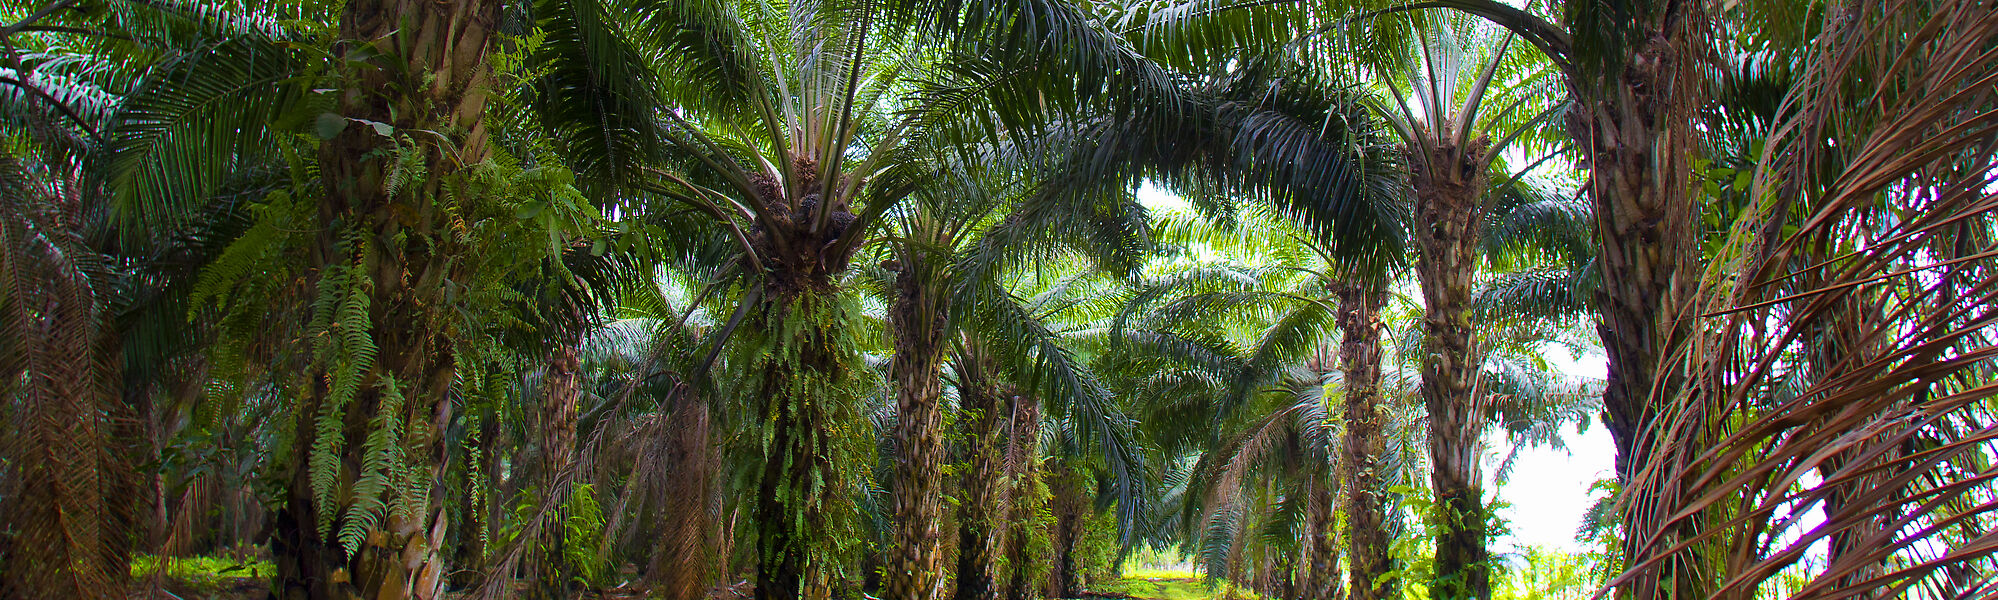 Nelson oil palm sprinkler irrigation system for farms